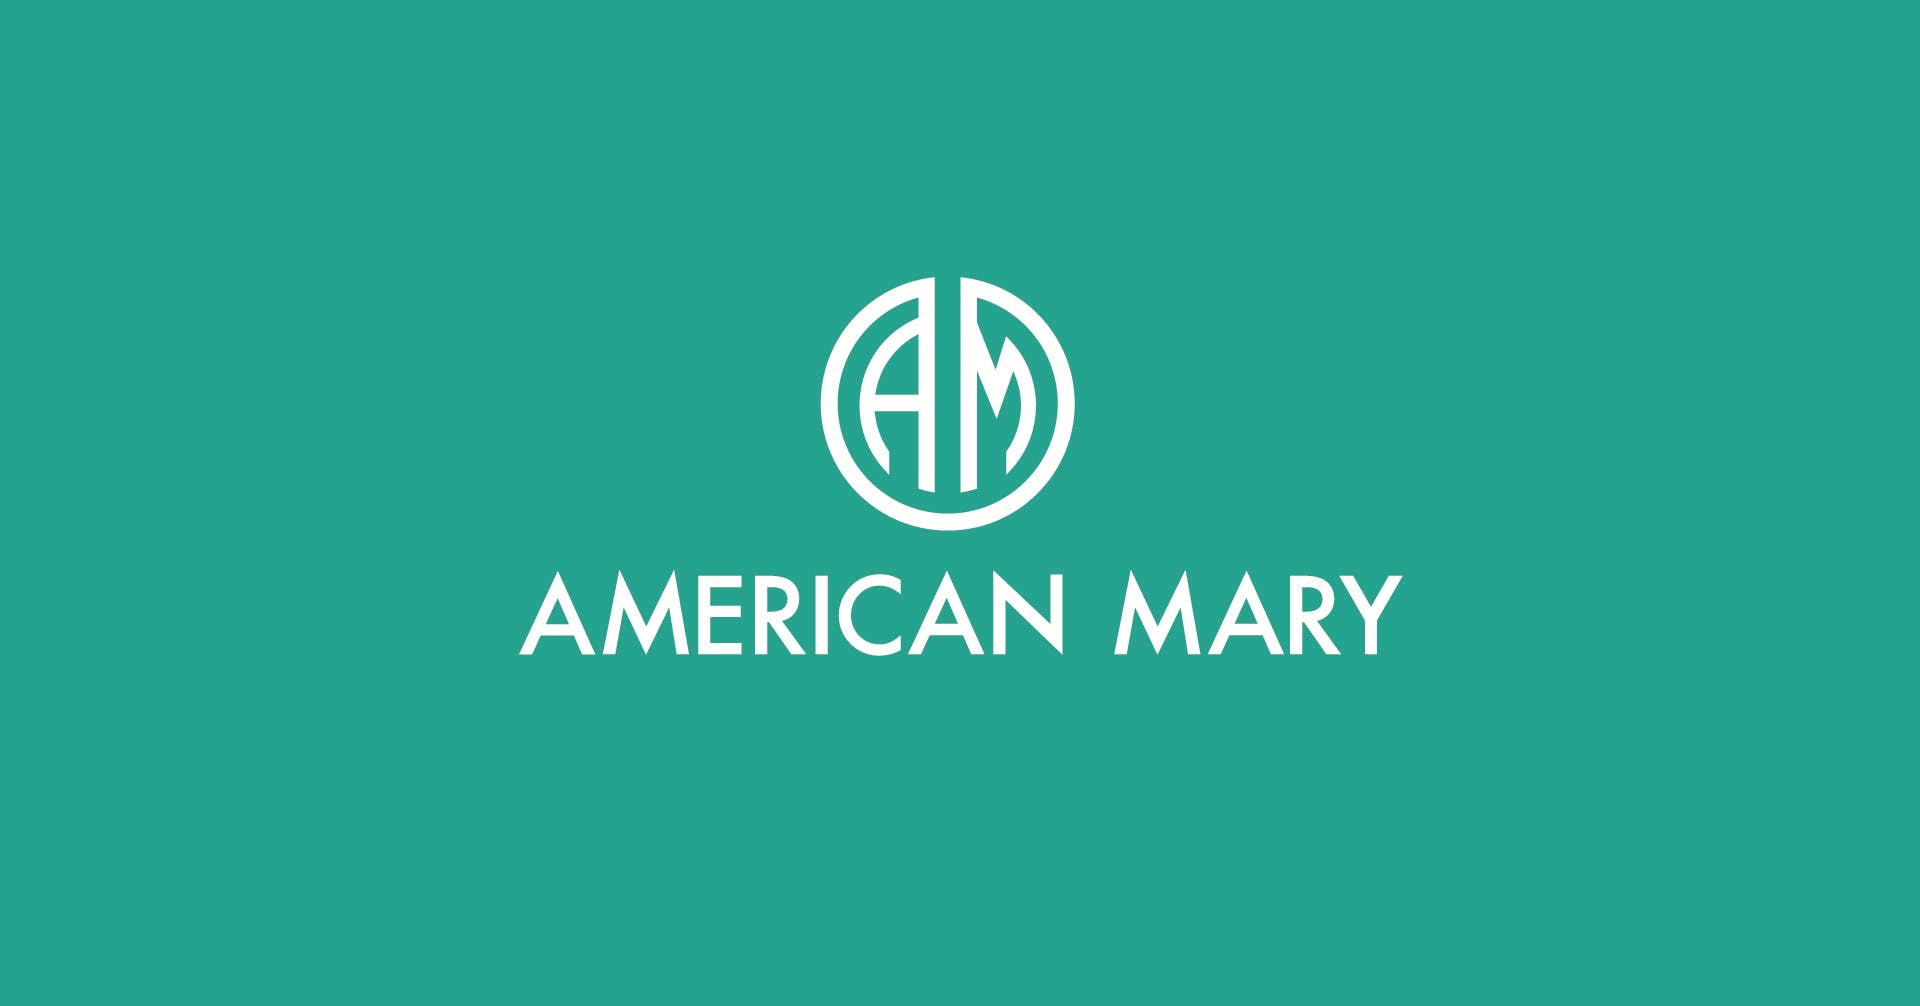 American Mary - Medical Marijuana Doctors - Cannabizme.com